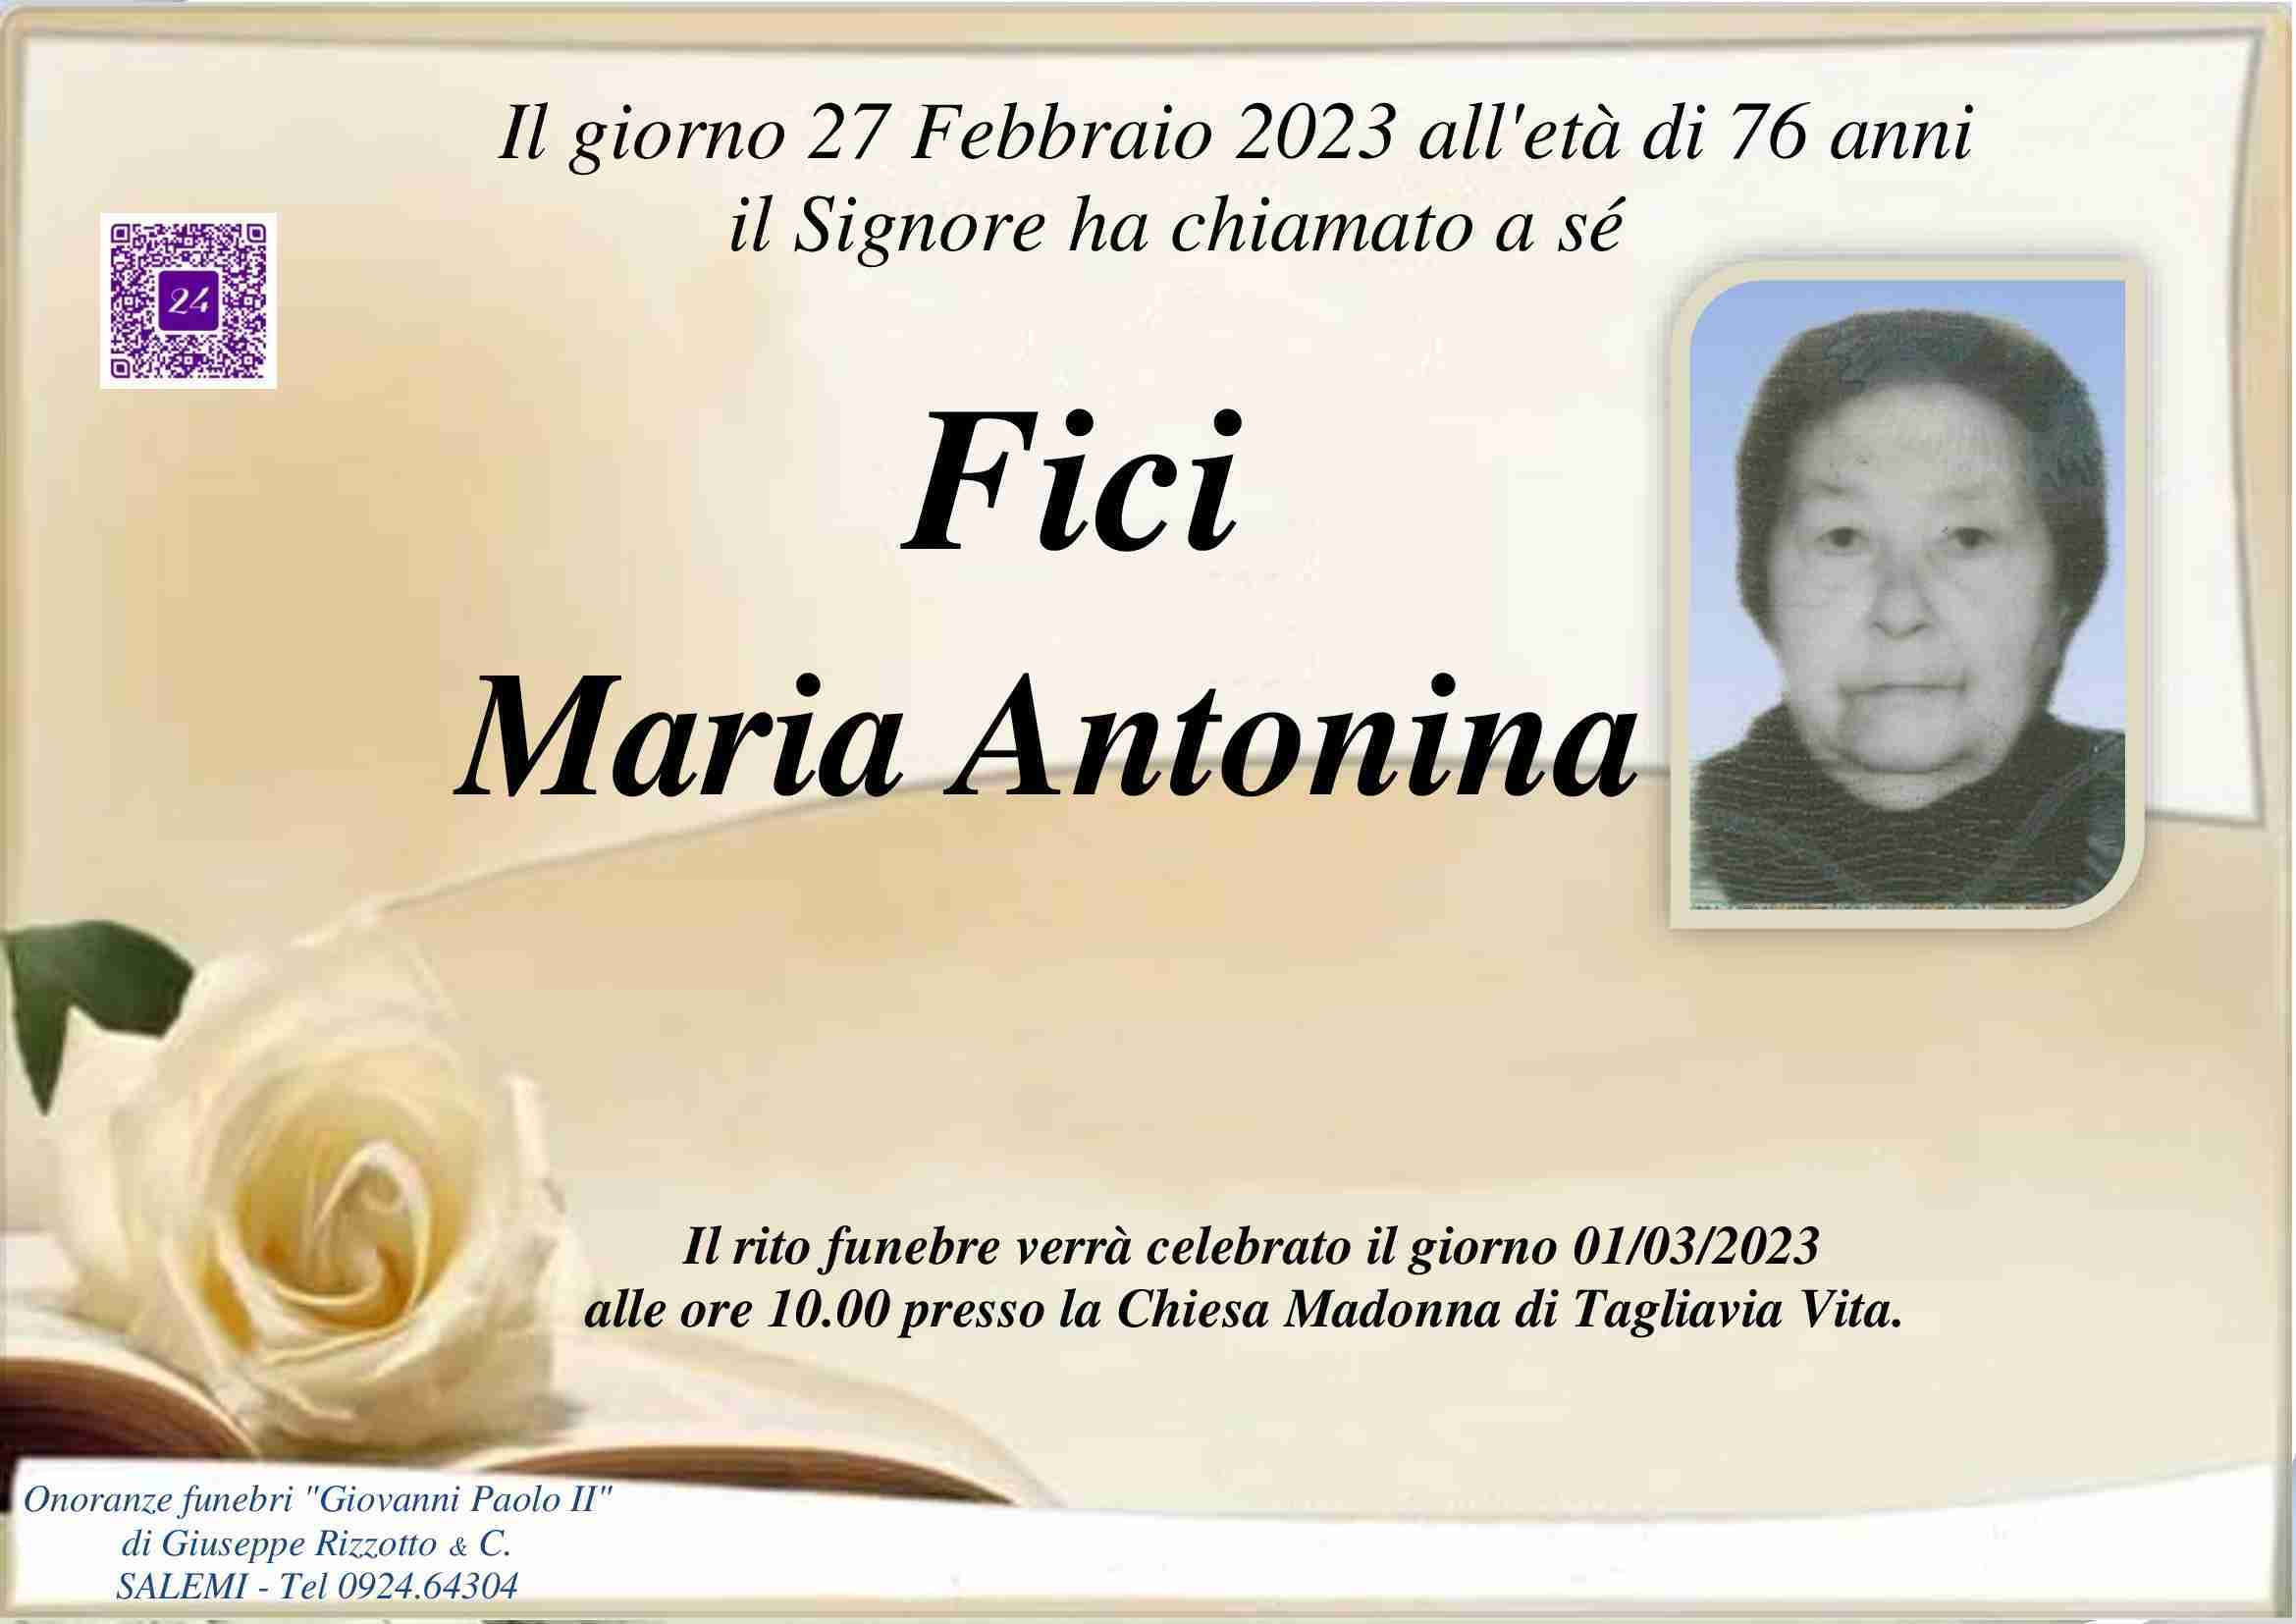 Maria Antonina Fici